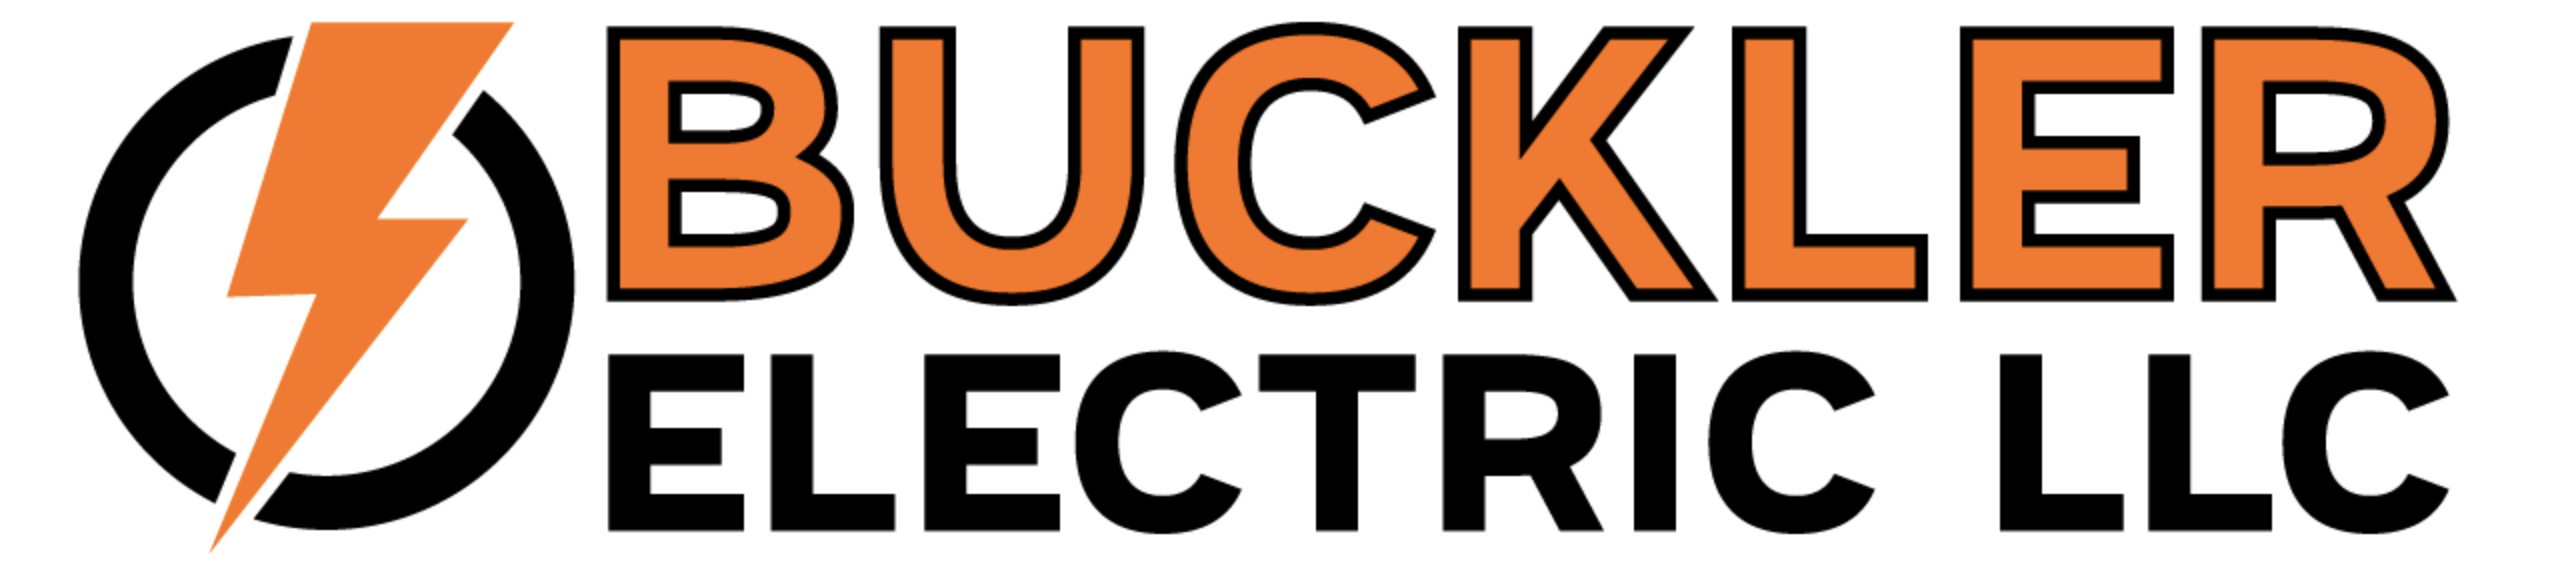 Buckler Electric Logo New